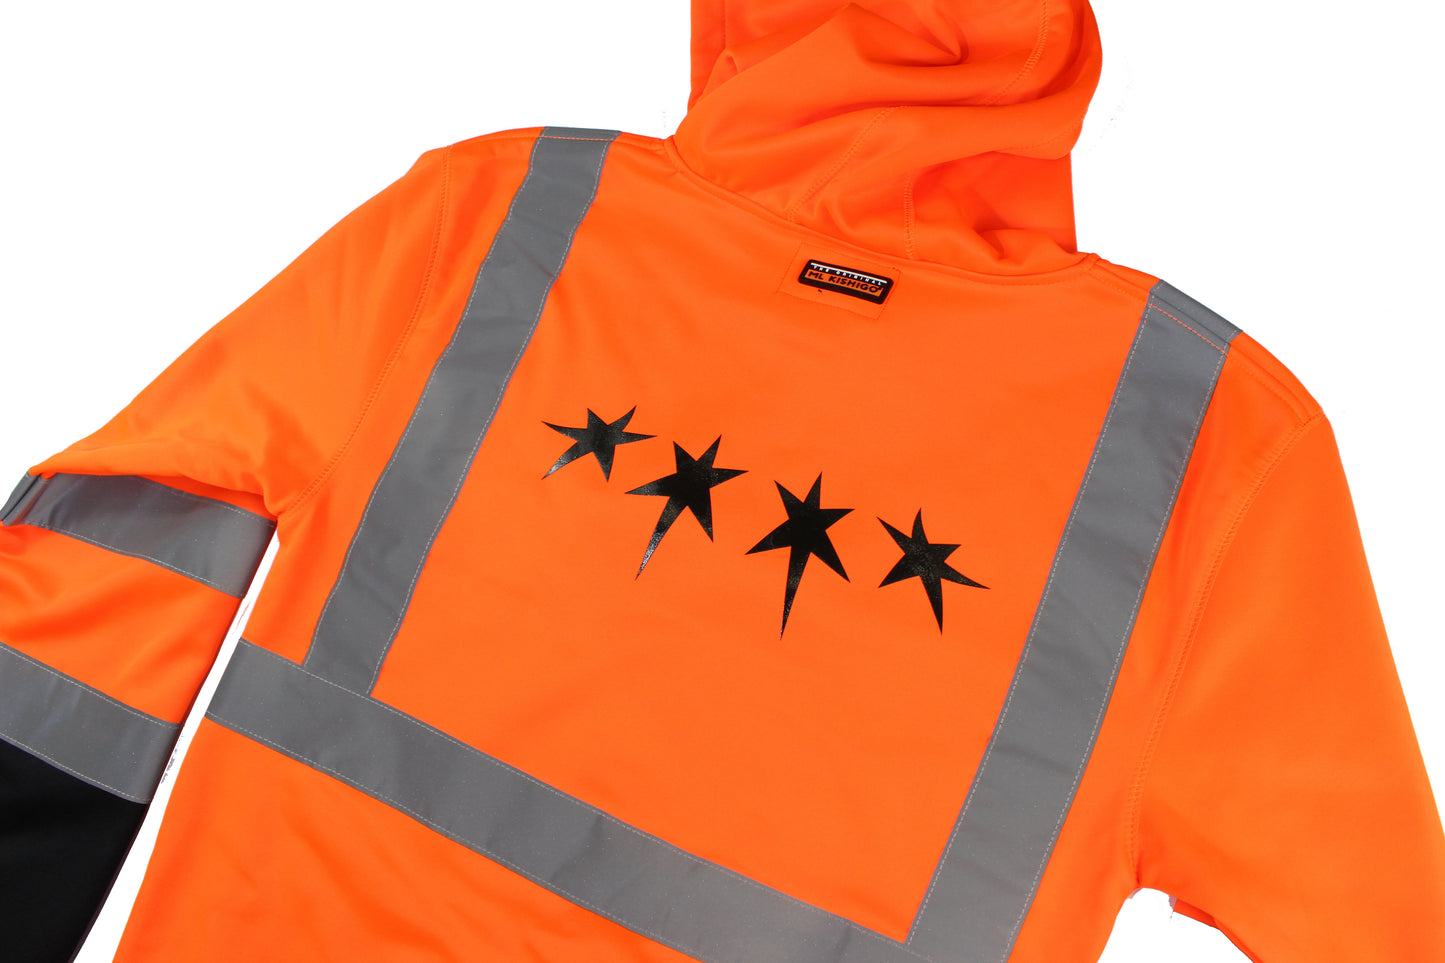 Cyber Chicago (Construction Orange)